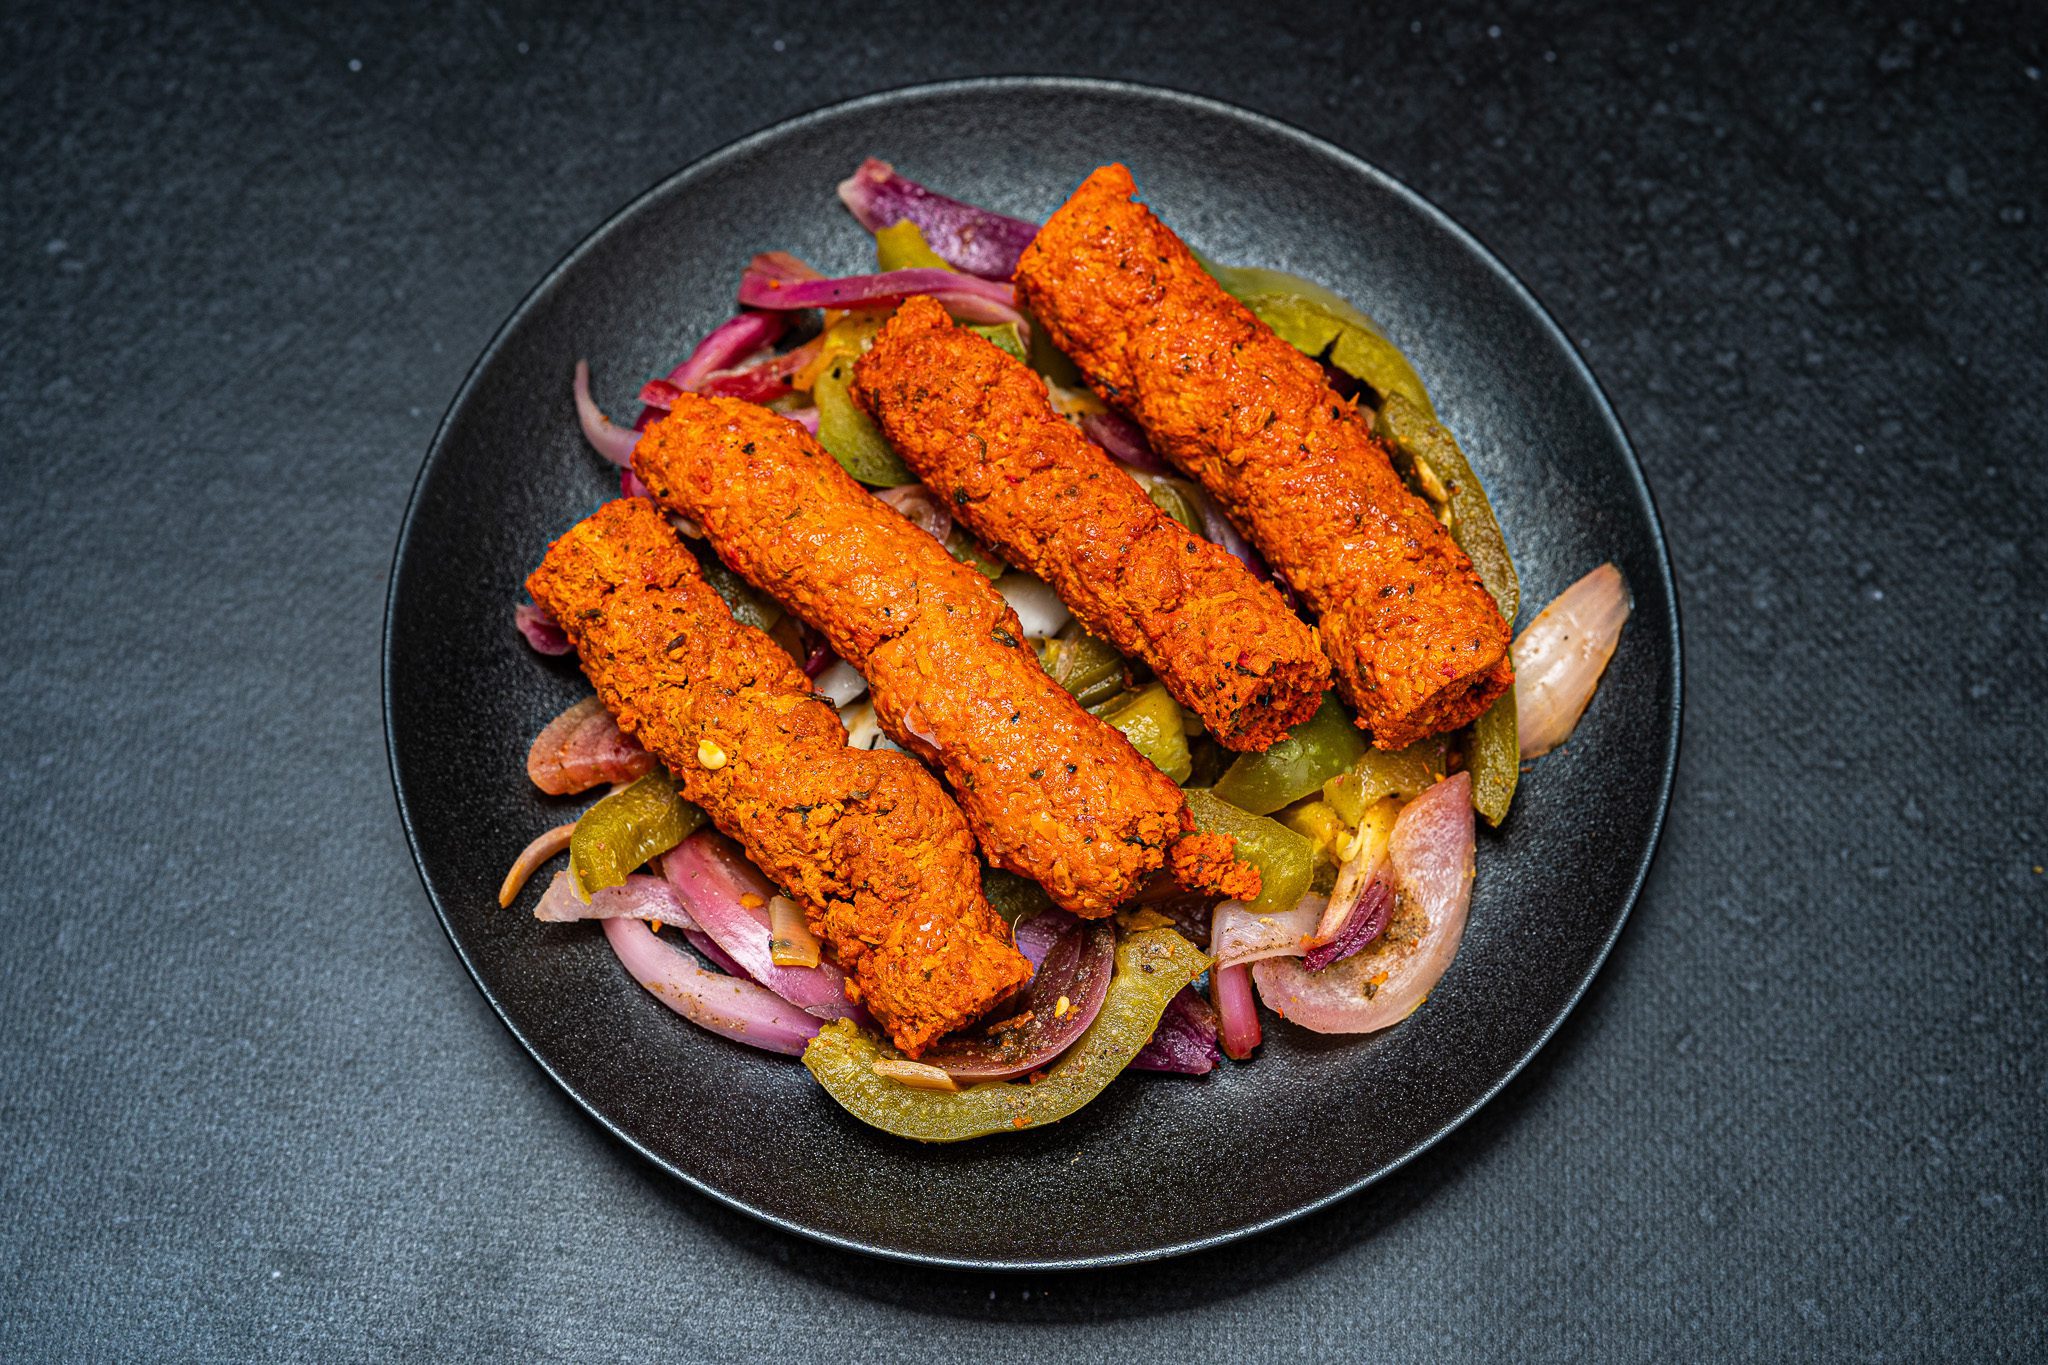 shish kebabs an example of food photography